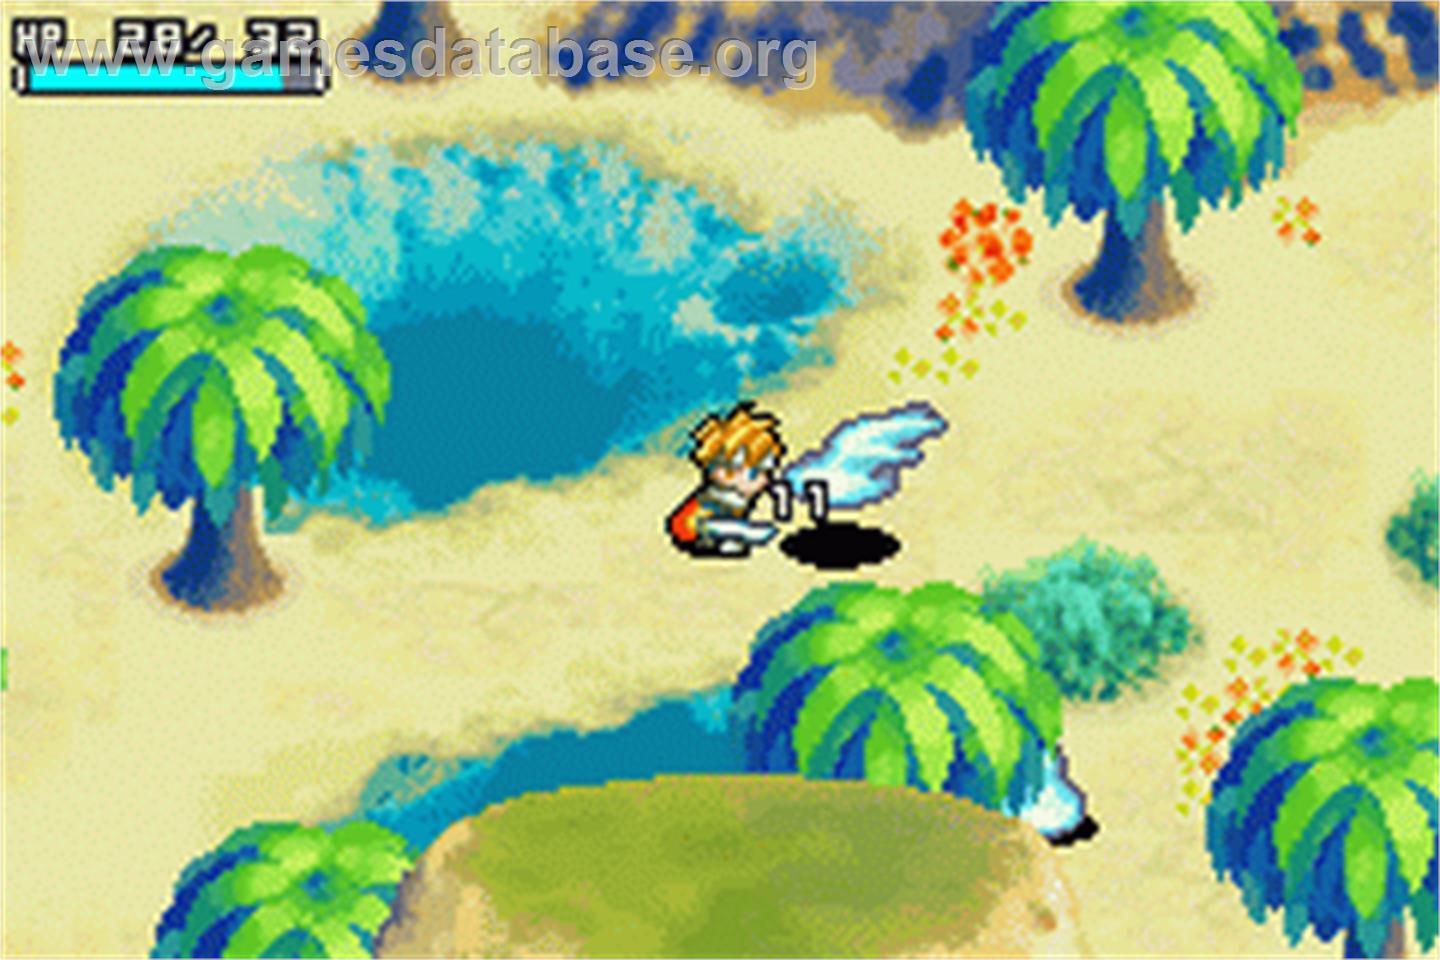 Diving Corsola - Nintendo Game Boy Advance - Artwork - In Game